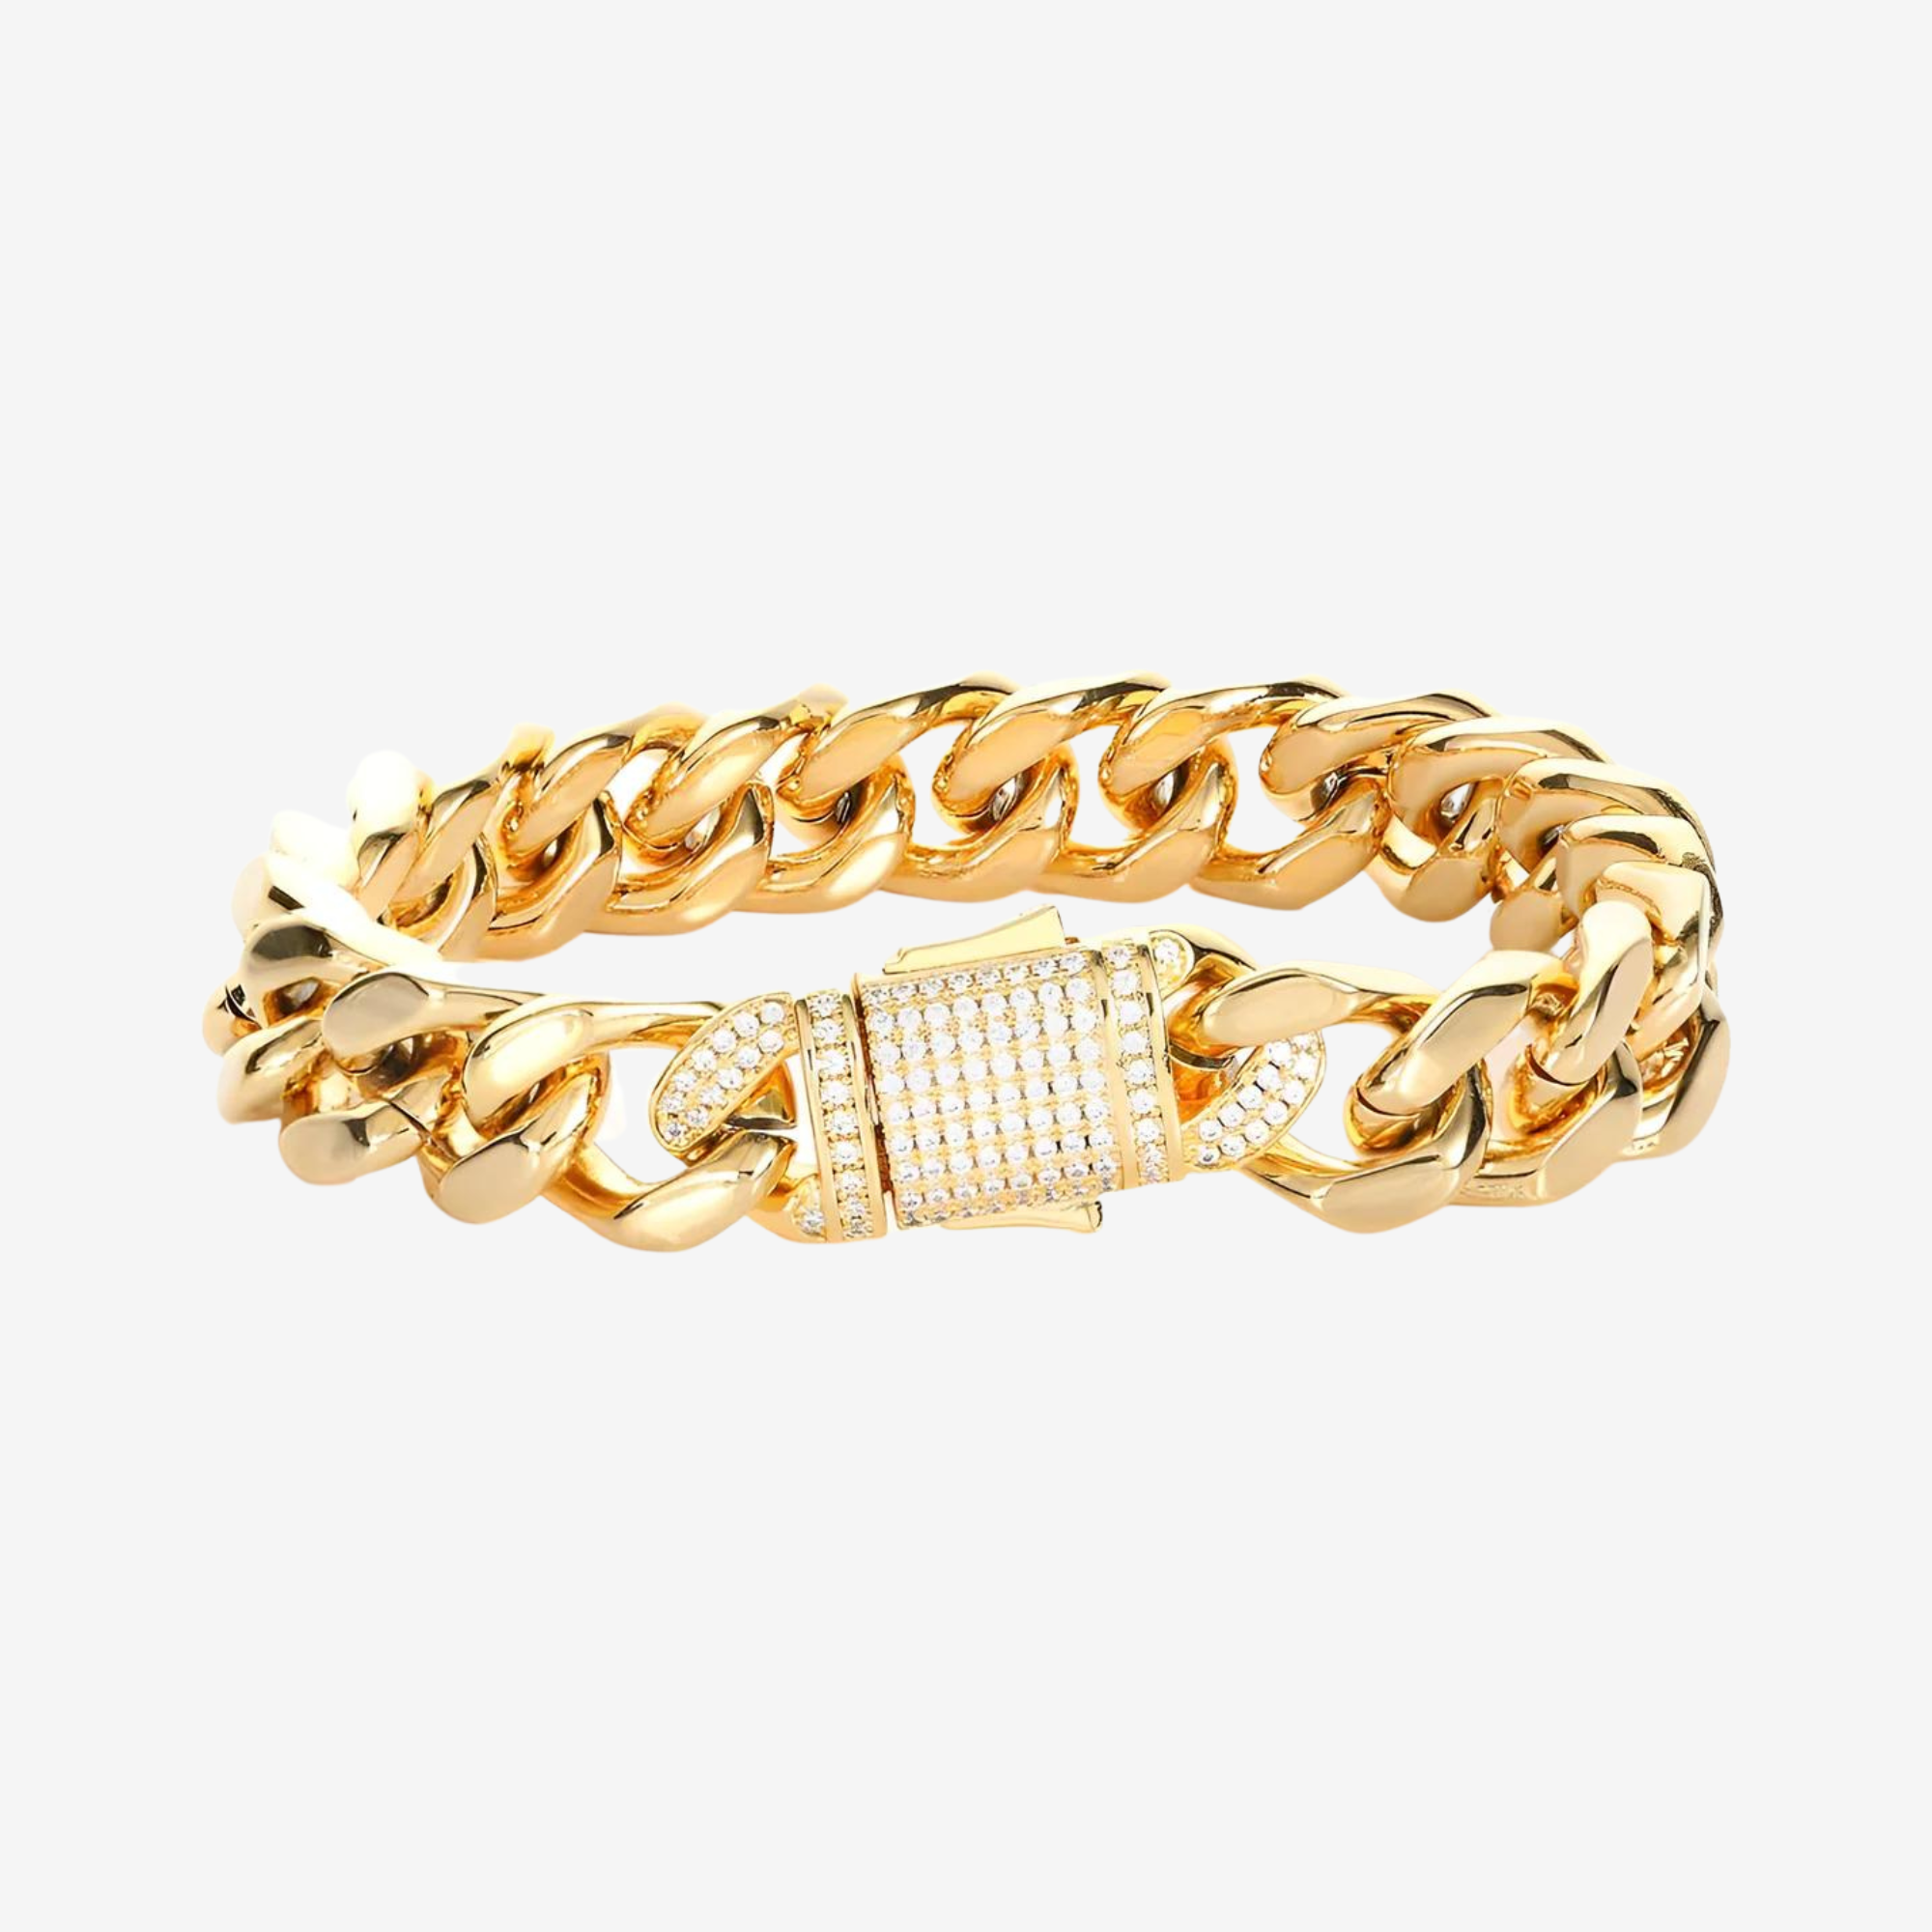 Hillenic 10mm stainless steel Cuban link bracelet, Gold Iced mens Cuban Link Bracelet